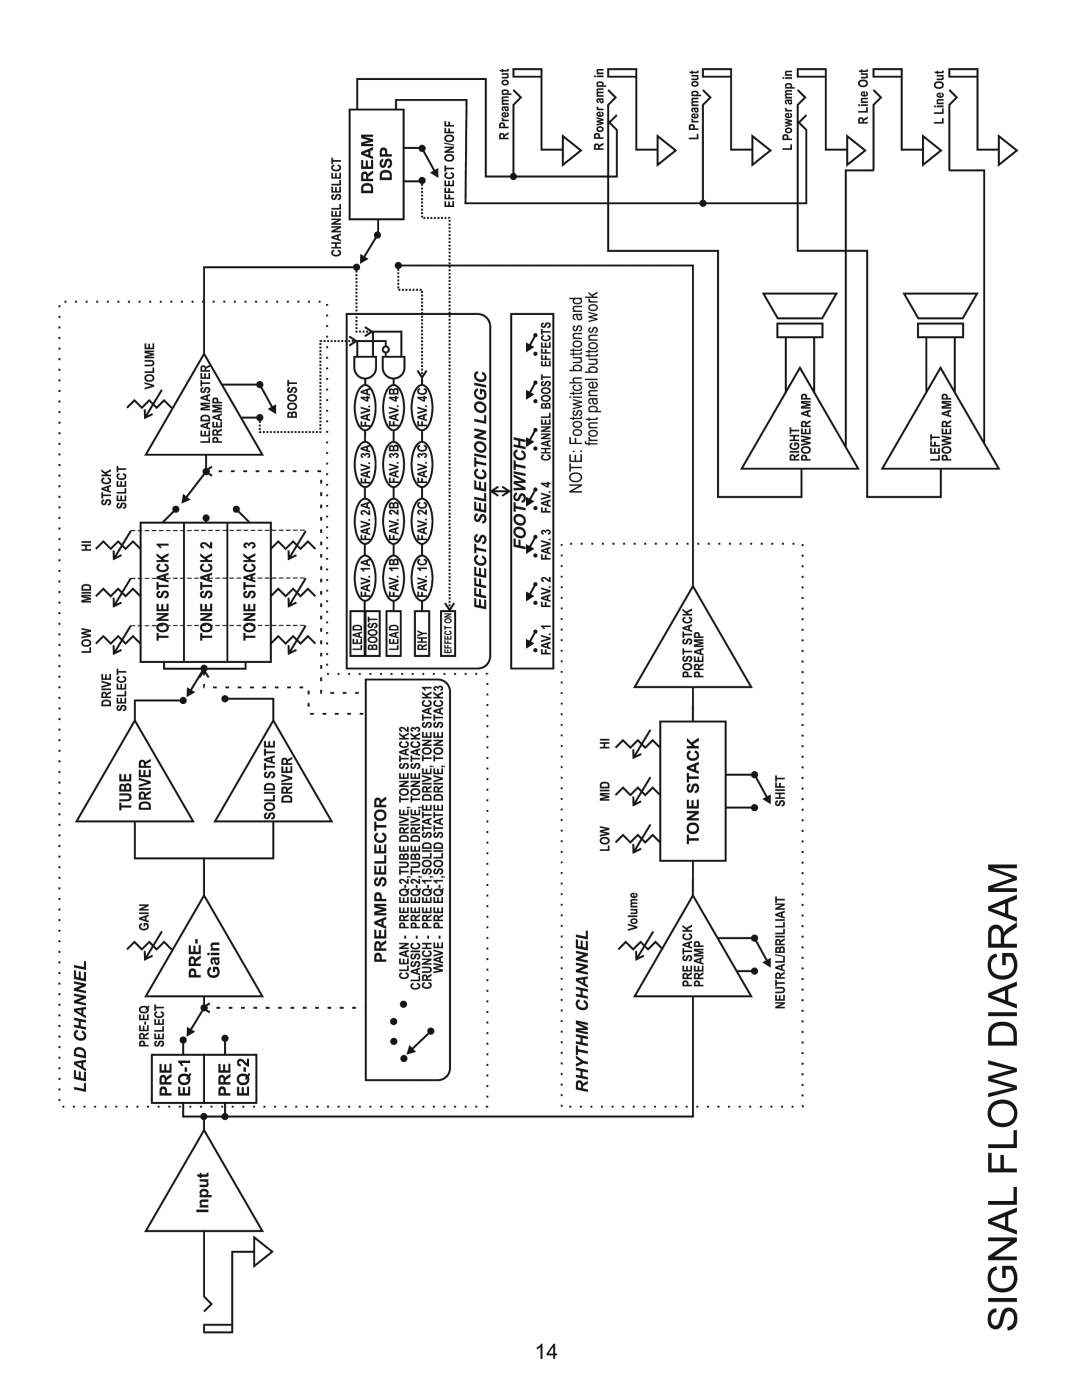 Kustom Wav 1000 owner manual Signal Flow Diagram, Effects Selection Logic, Footswitch, Lead Channel, Rhythm Channel 